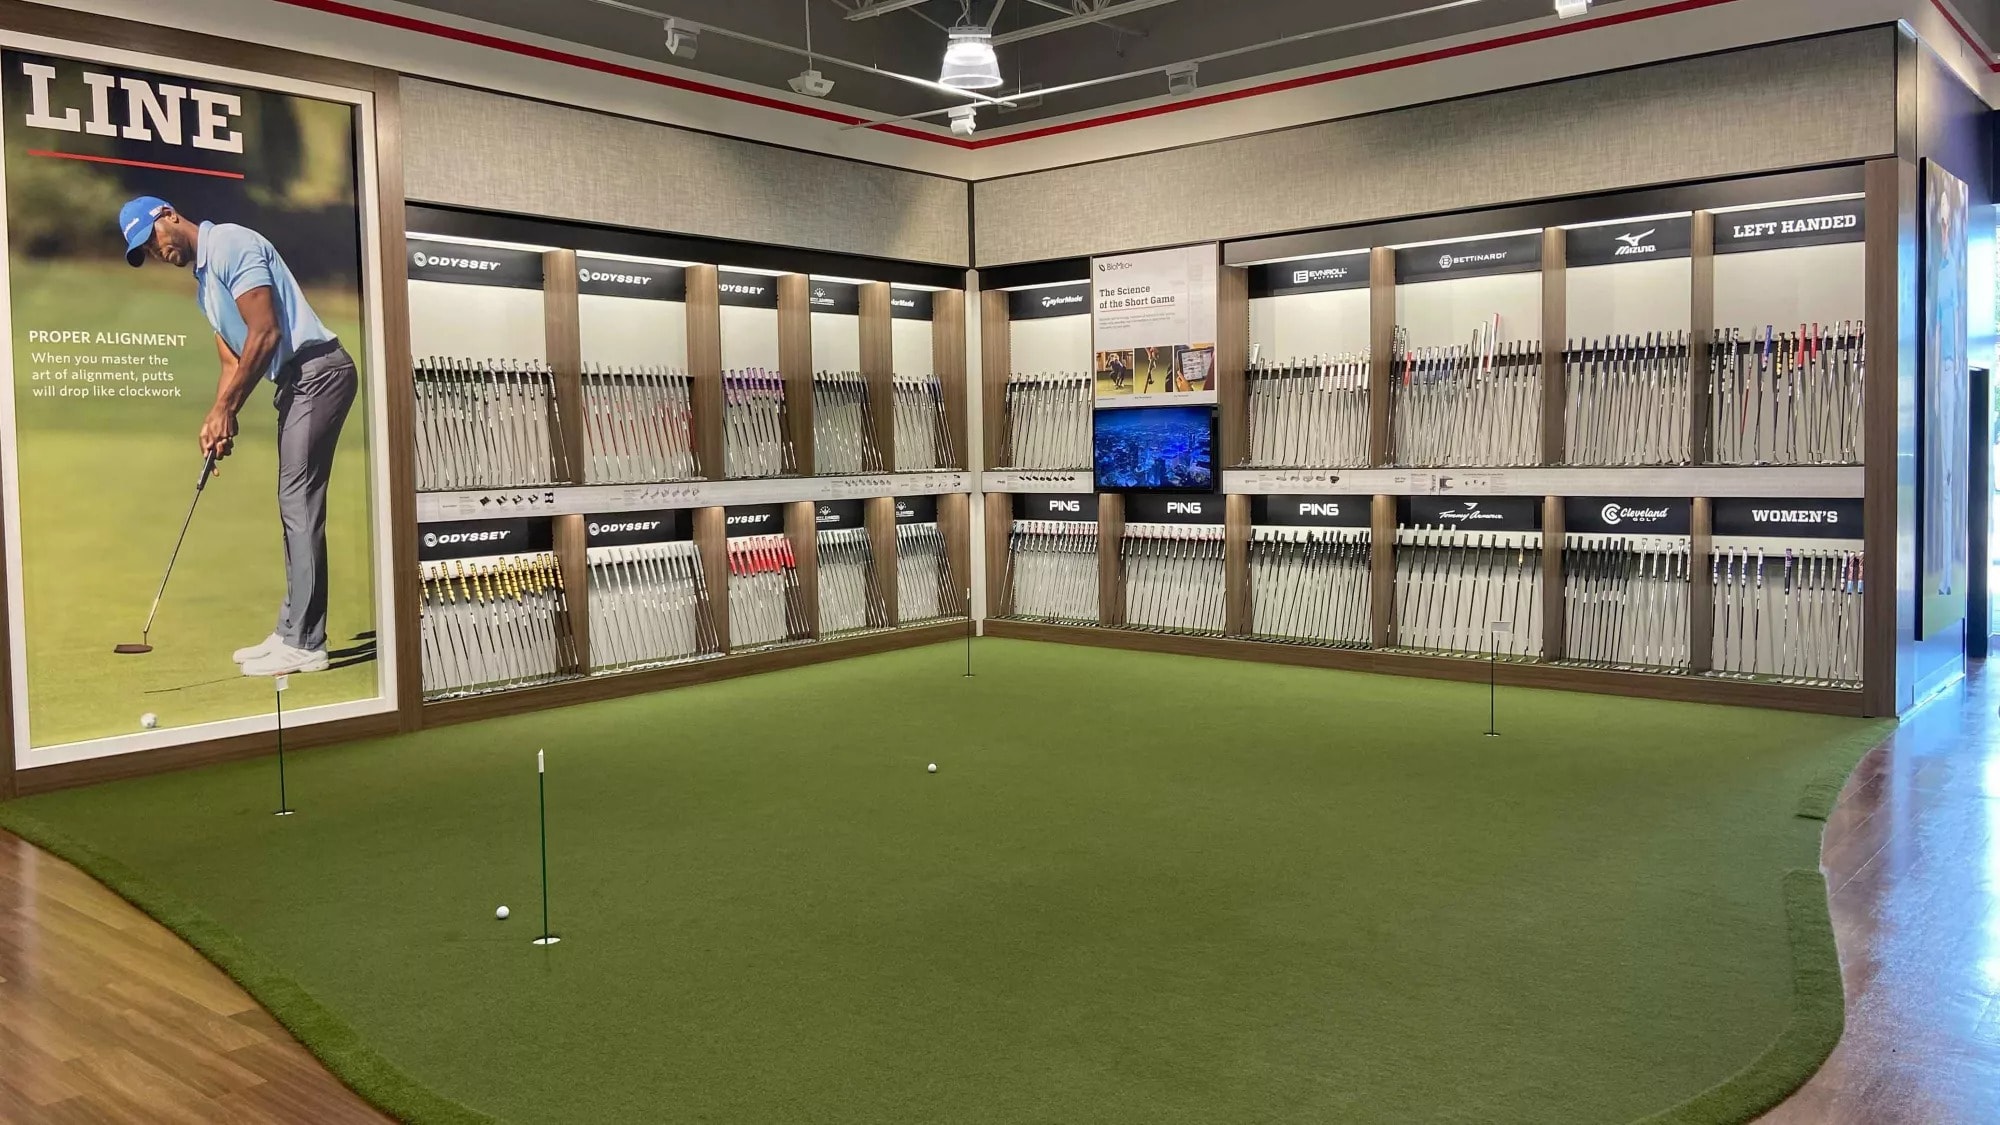 Golf Galaxy Clubs, Apparel and Equipment in Framingham, MA 3129